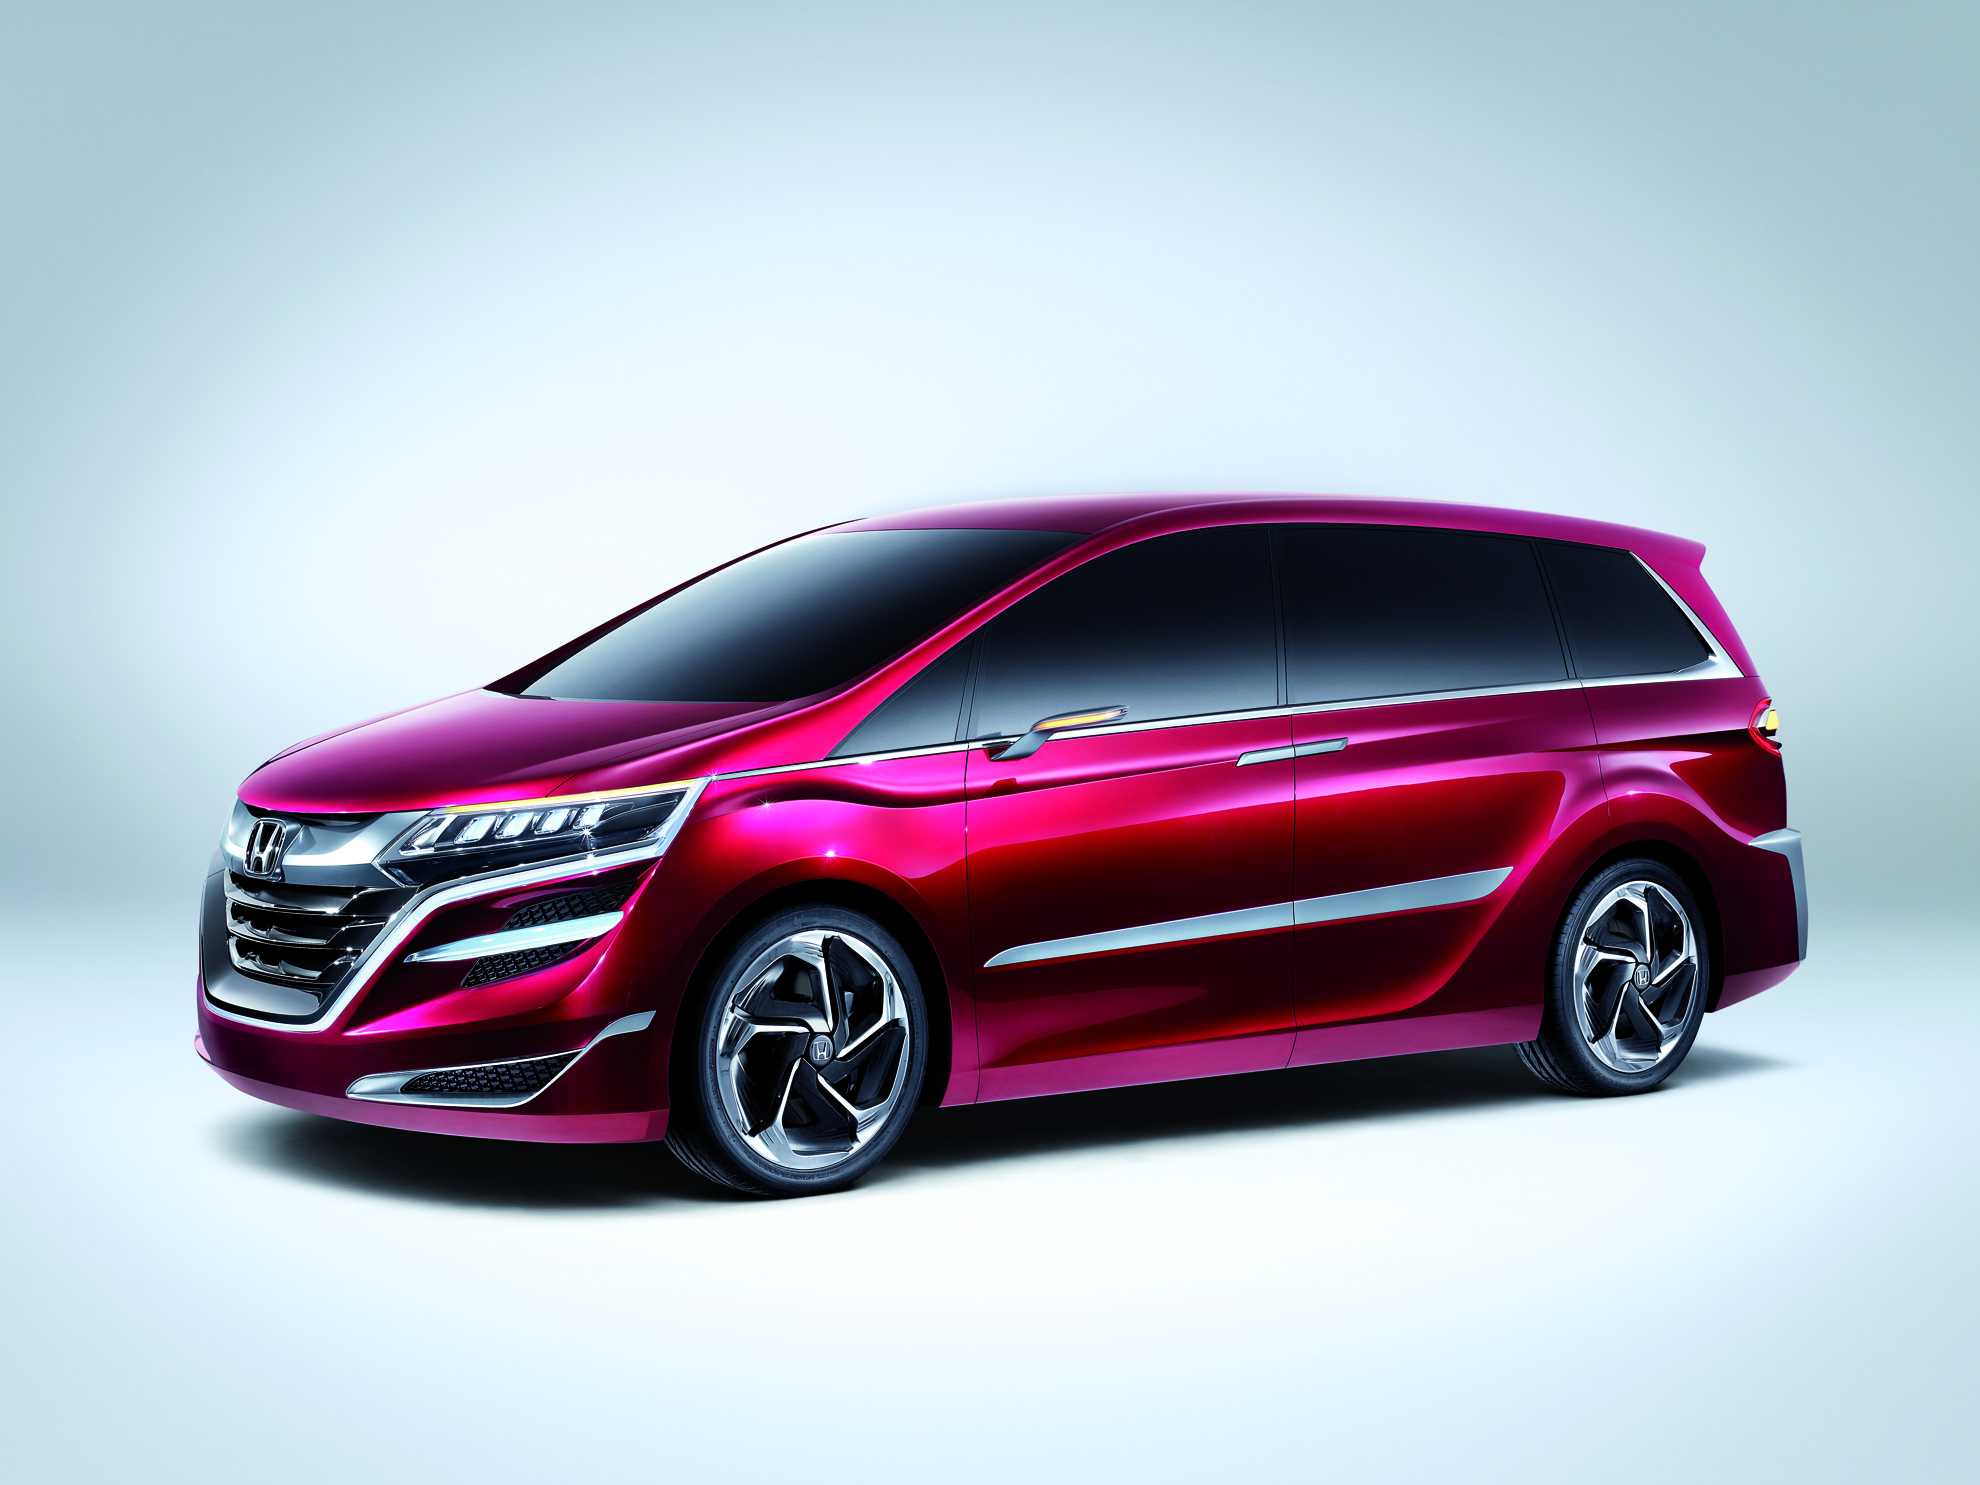 Auto Show Shanghai 2013 – Honda Premiers